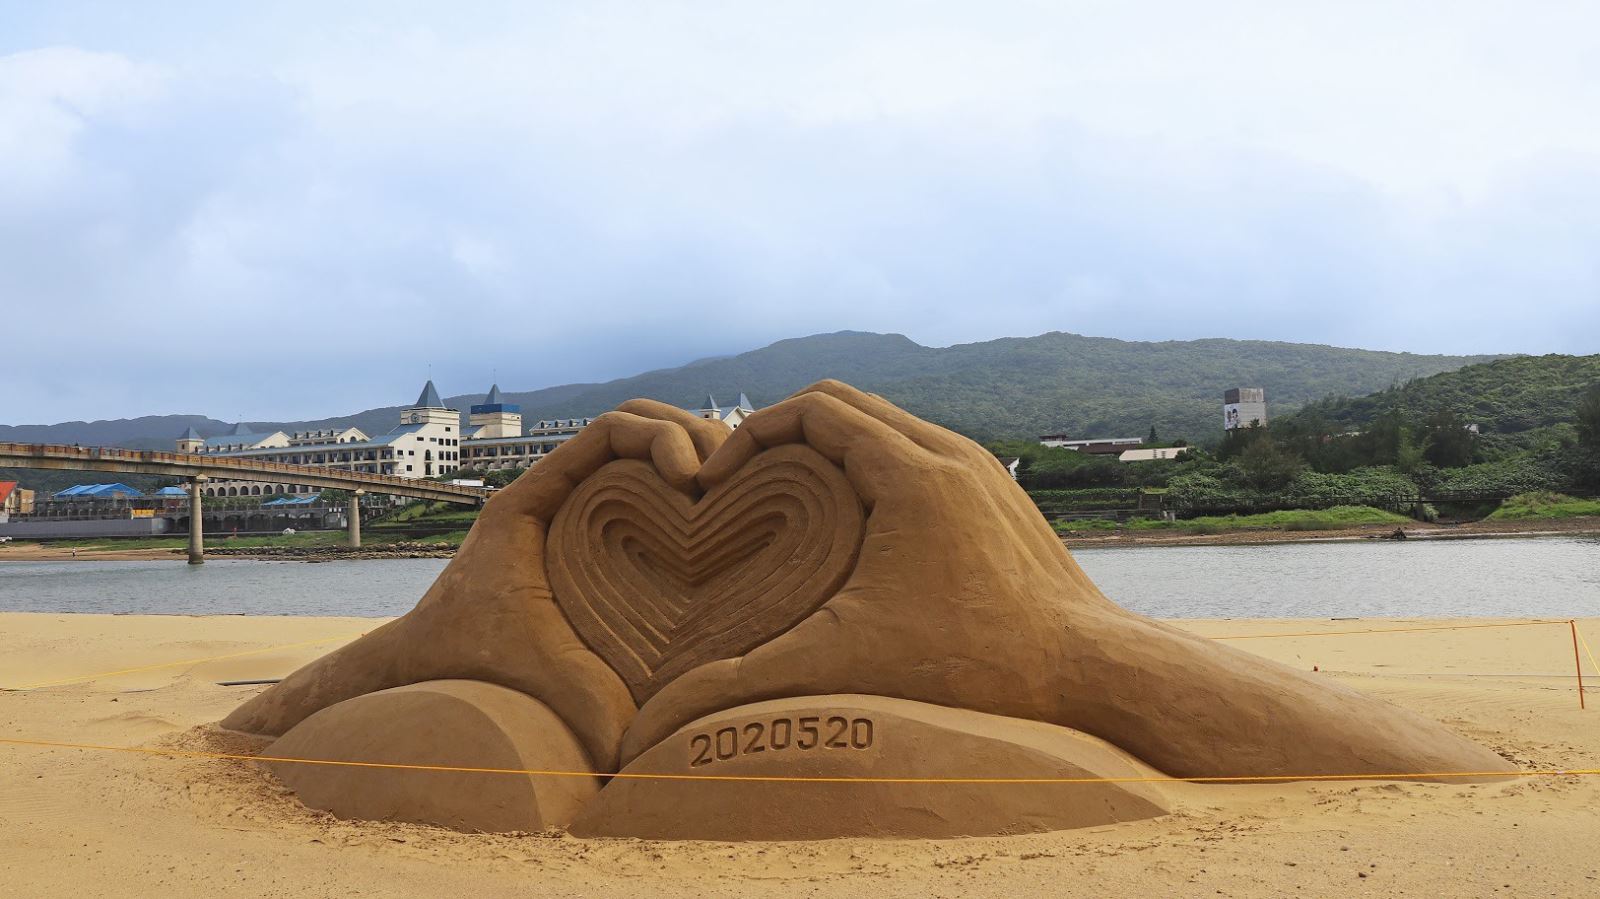 2020 sand sculpture